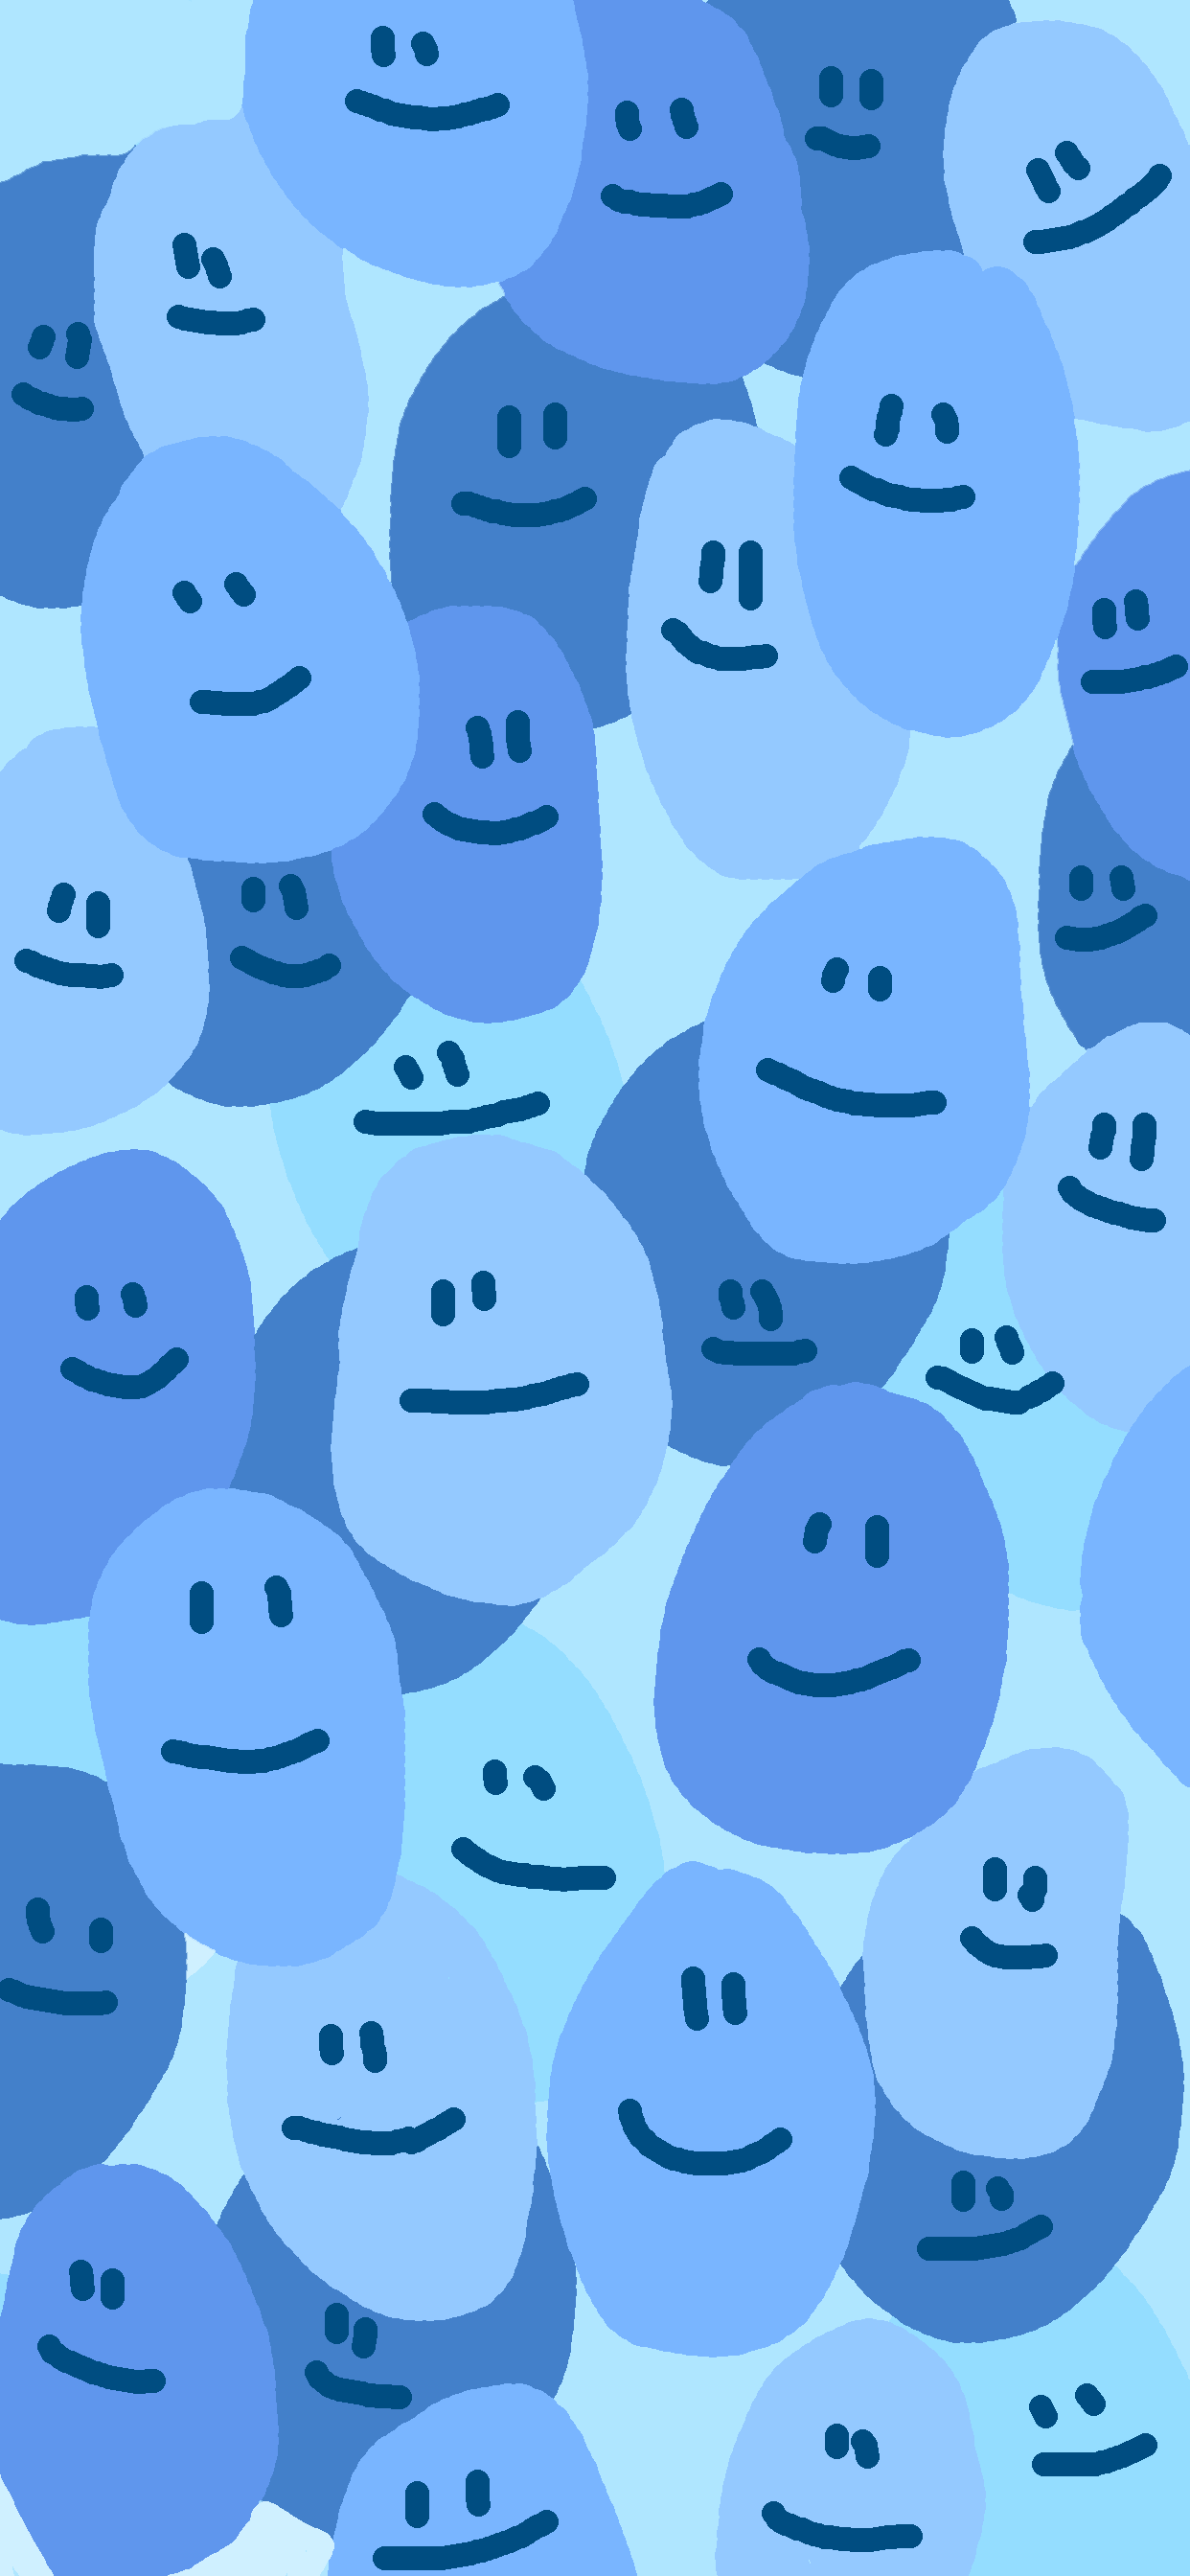 Blue Smiley Face Wallpaper. Preppy wallpaper, iPhone wallpaper preppy, Cute blue wallpaper